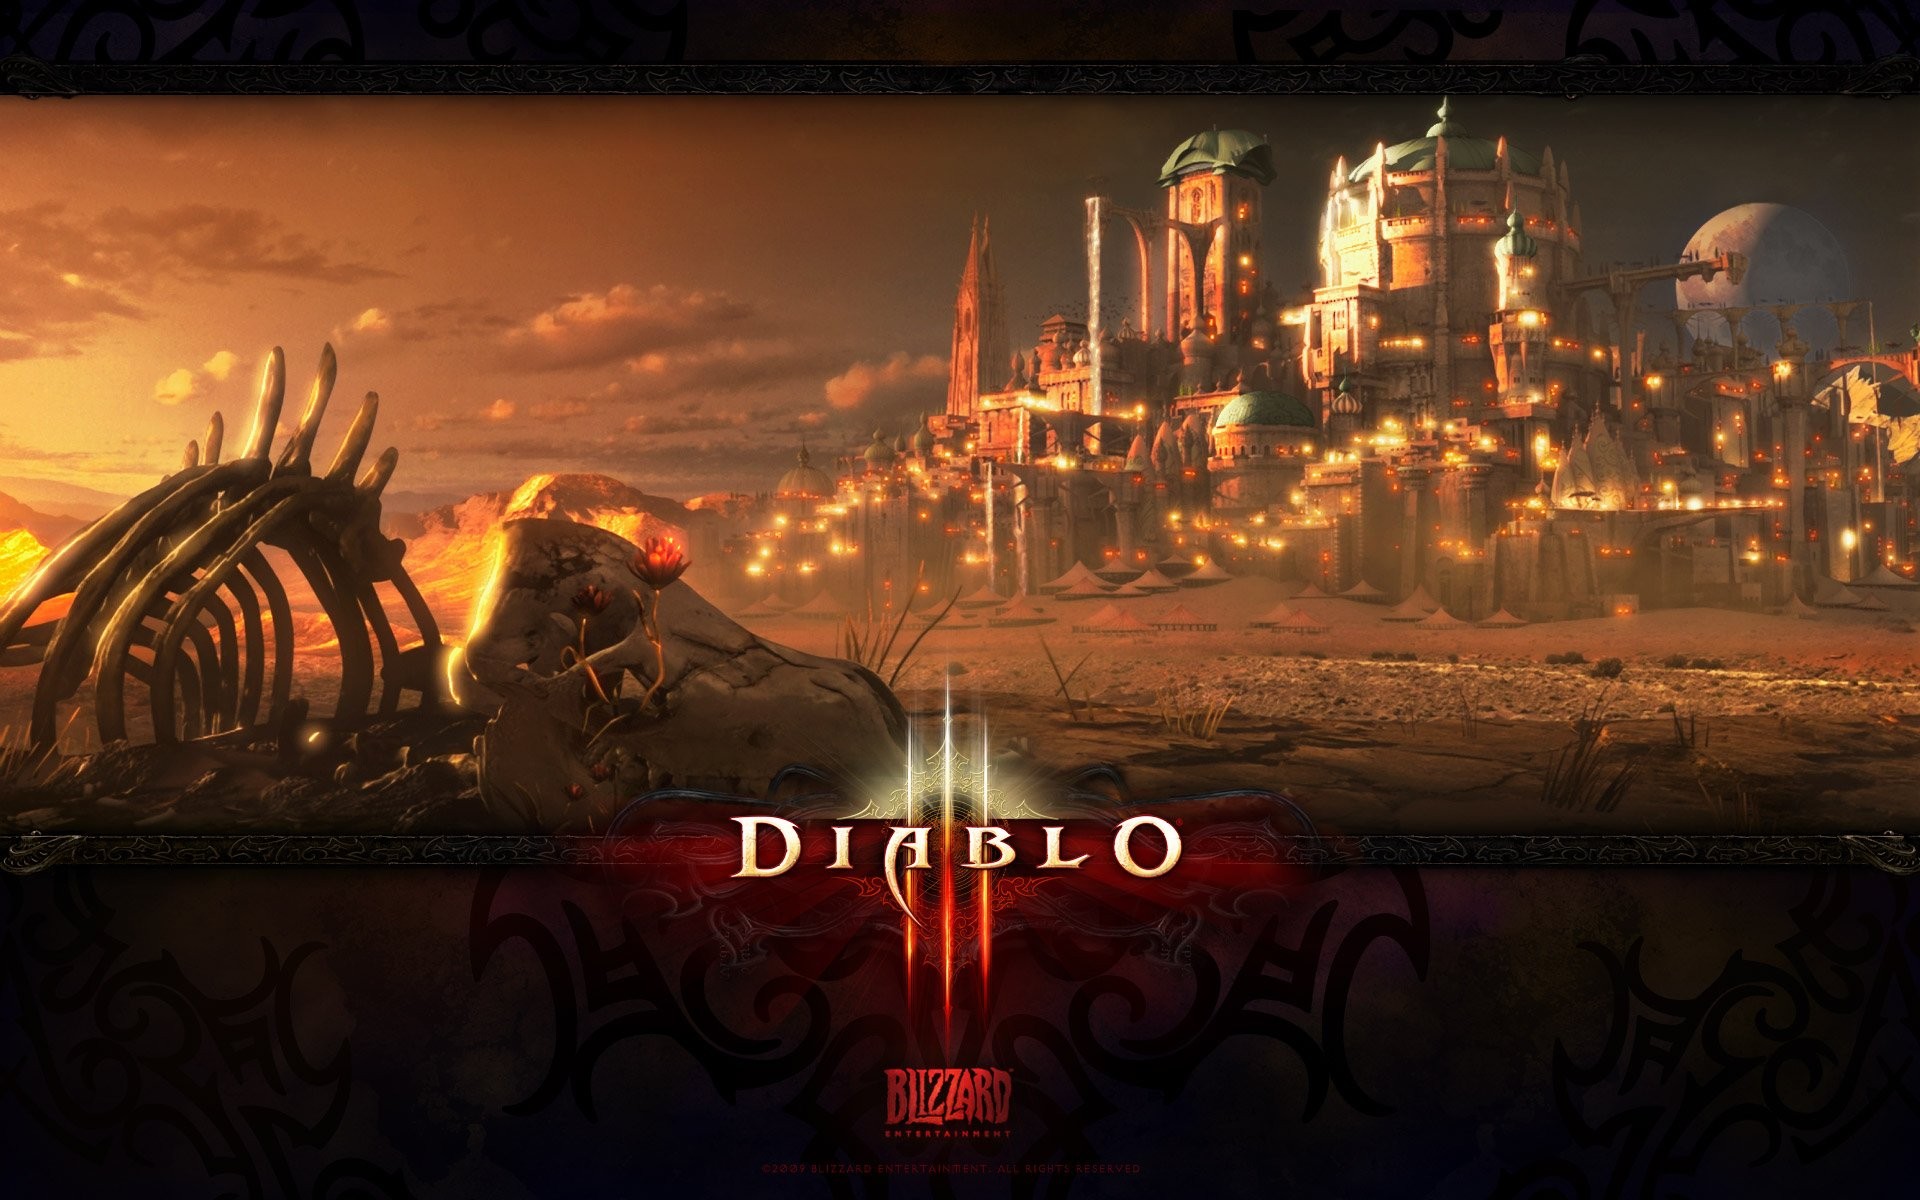 Diablo 3 Beautiful Wallpaper 7 1920x1200 Wallpaper Download Diablo